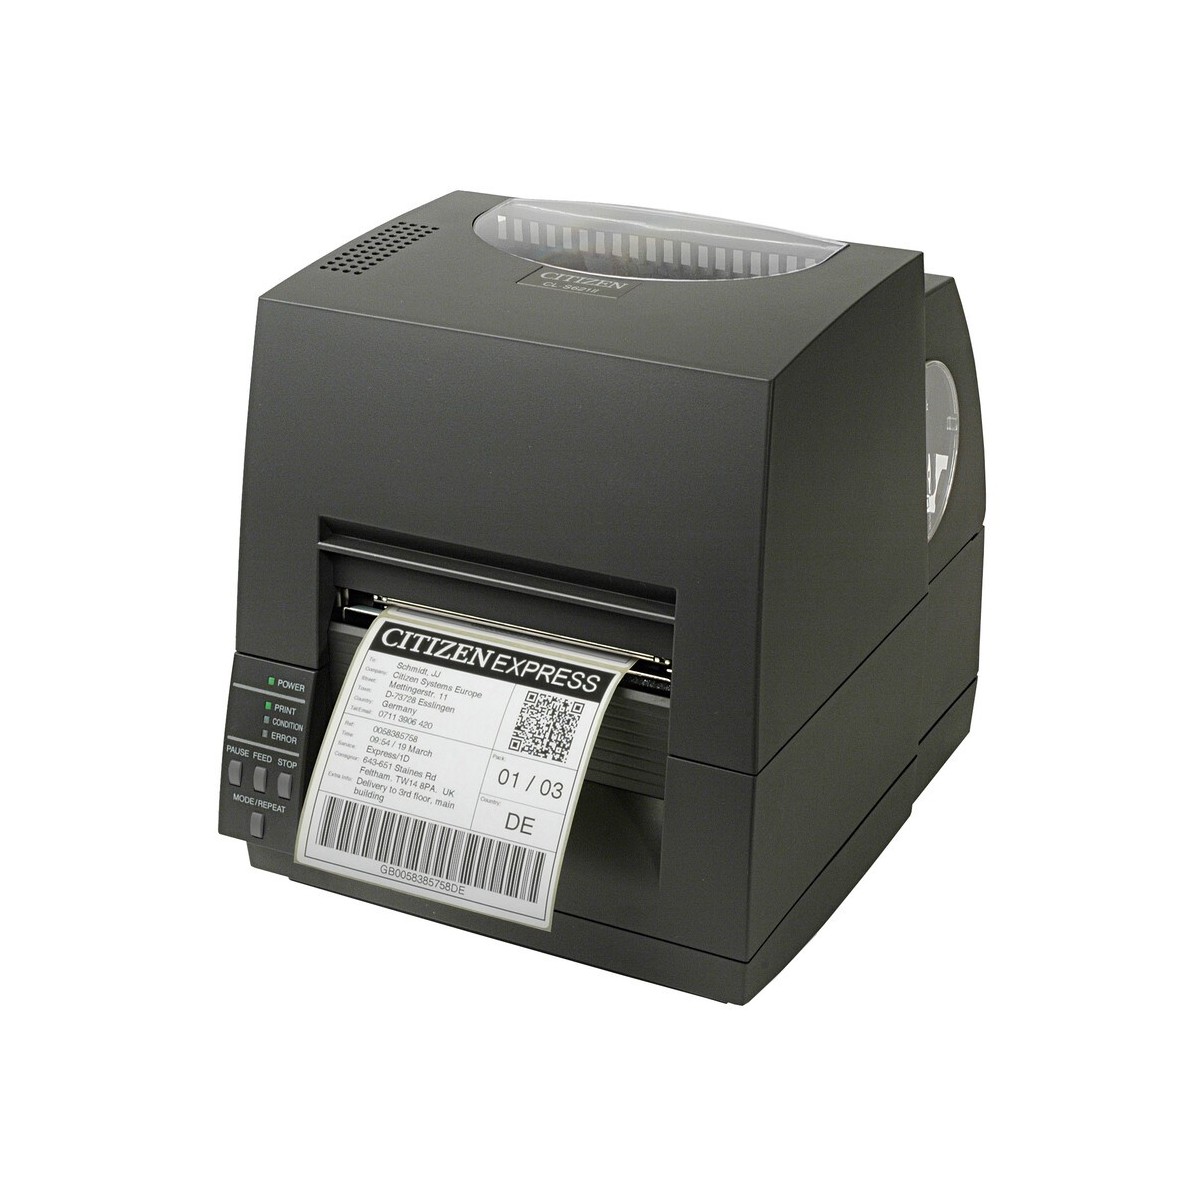 Citizen CL-S621II - Direct thermal / thermal transfer - POS printer - 203 x 203 DPI - 150 mm/sec - 10.4 cm - 2.54 m